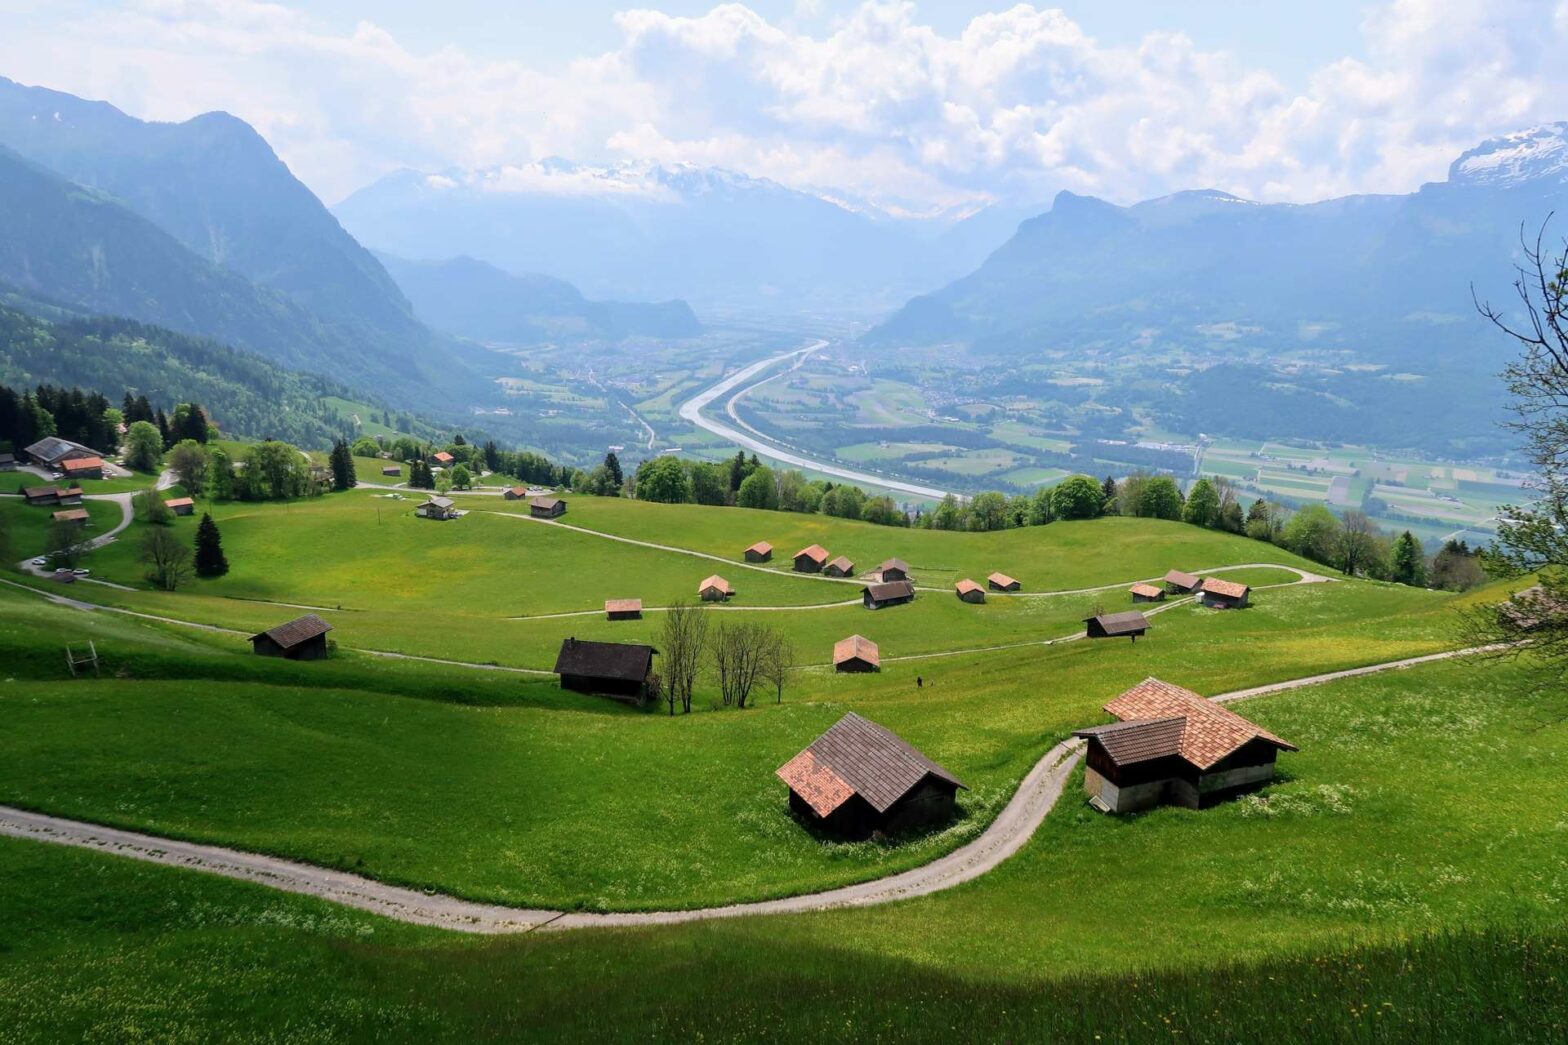 Hay meadows and barns in Liechtenstein